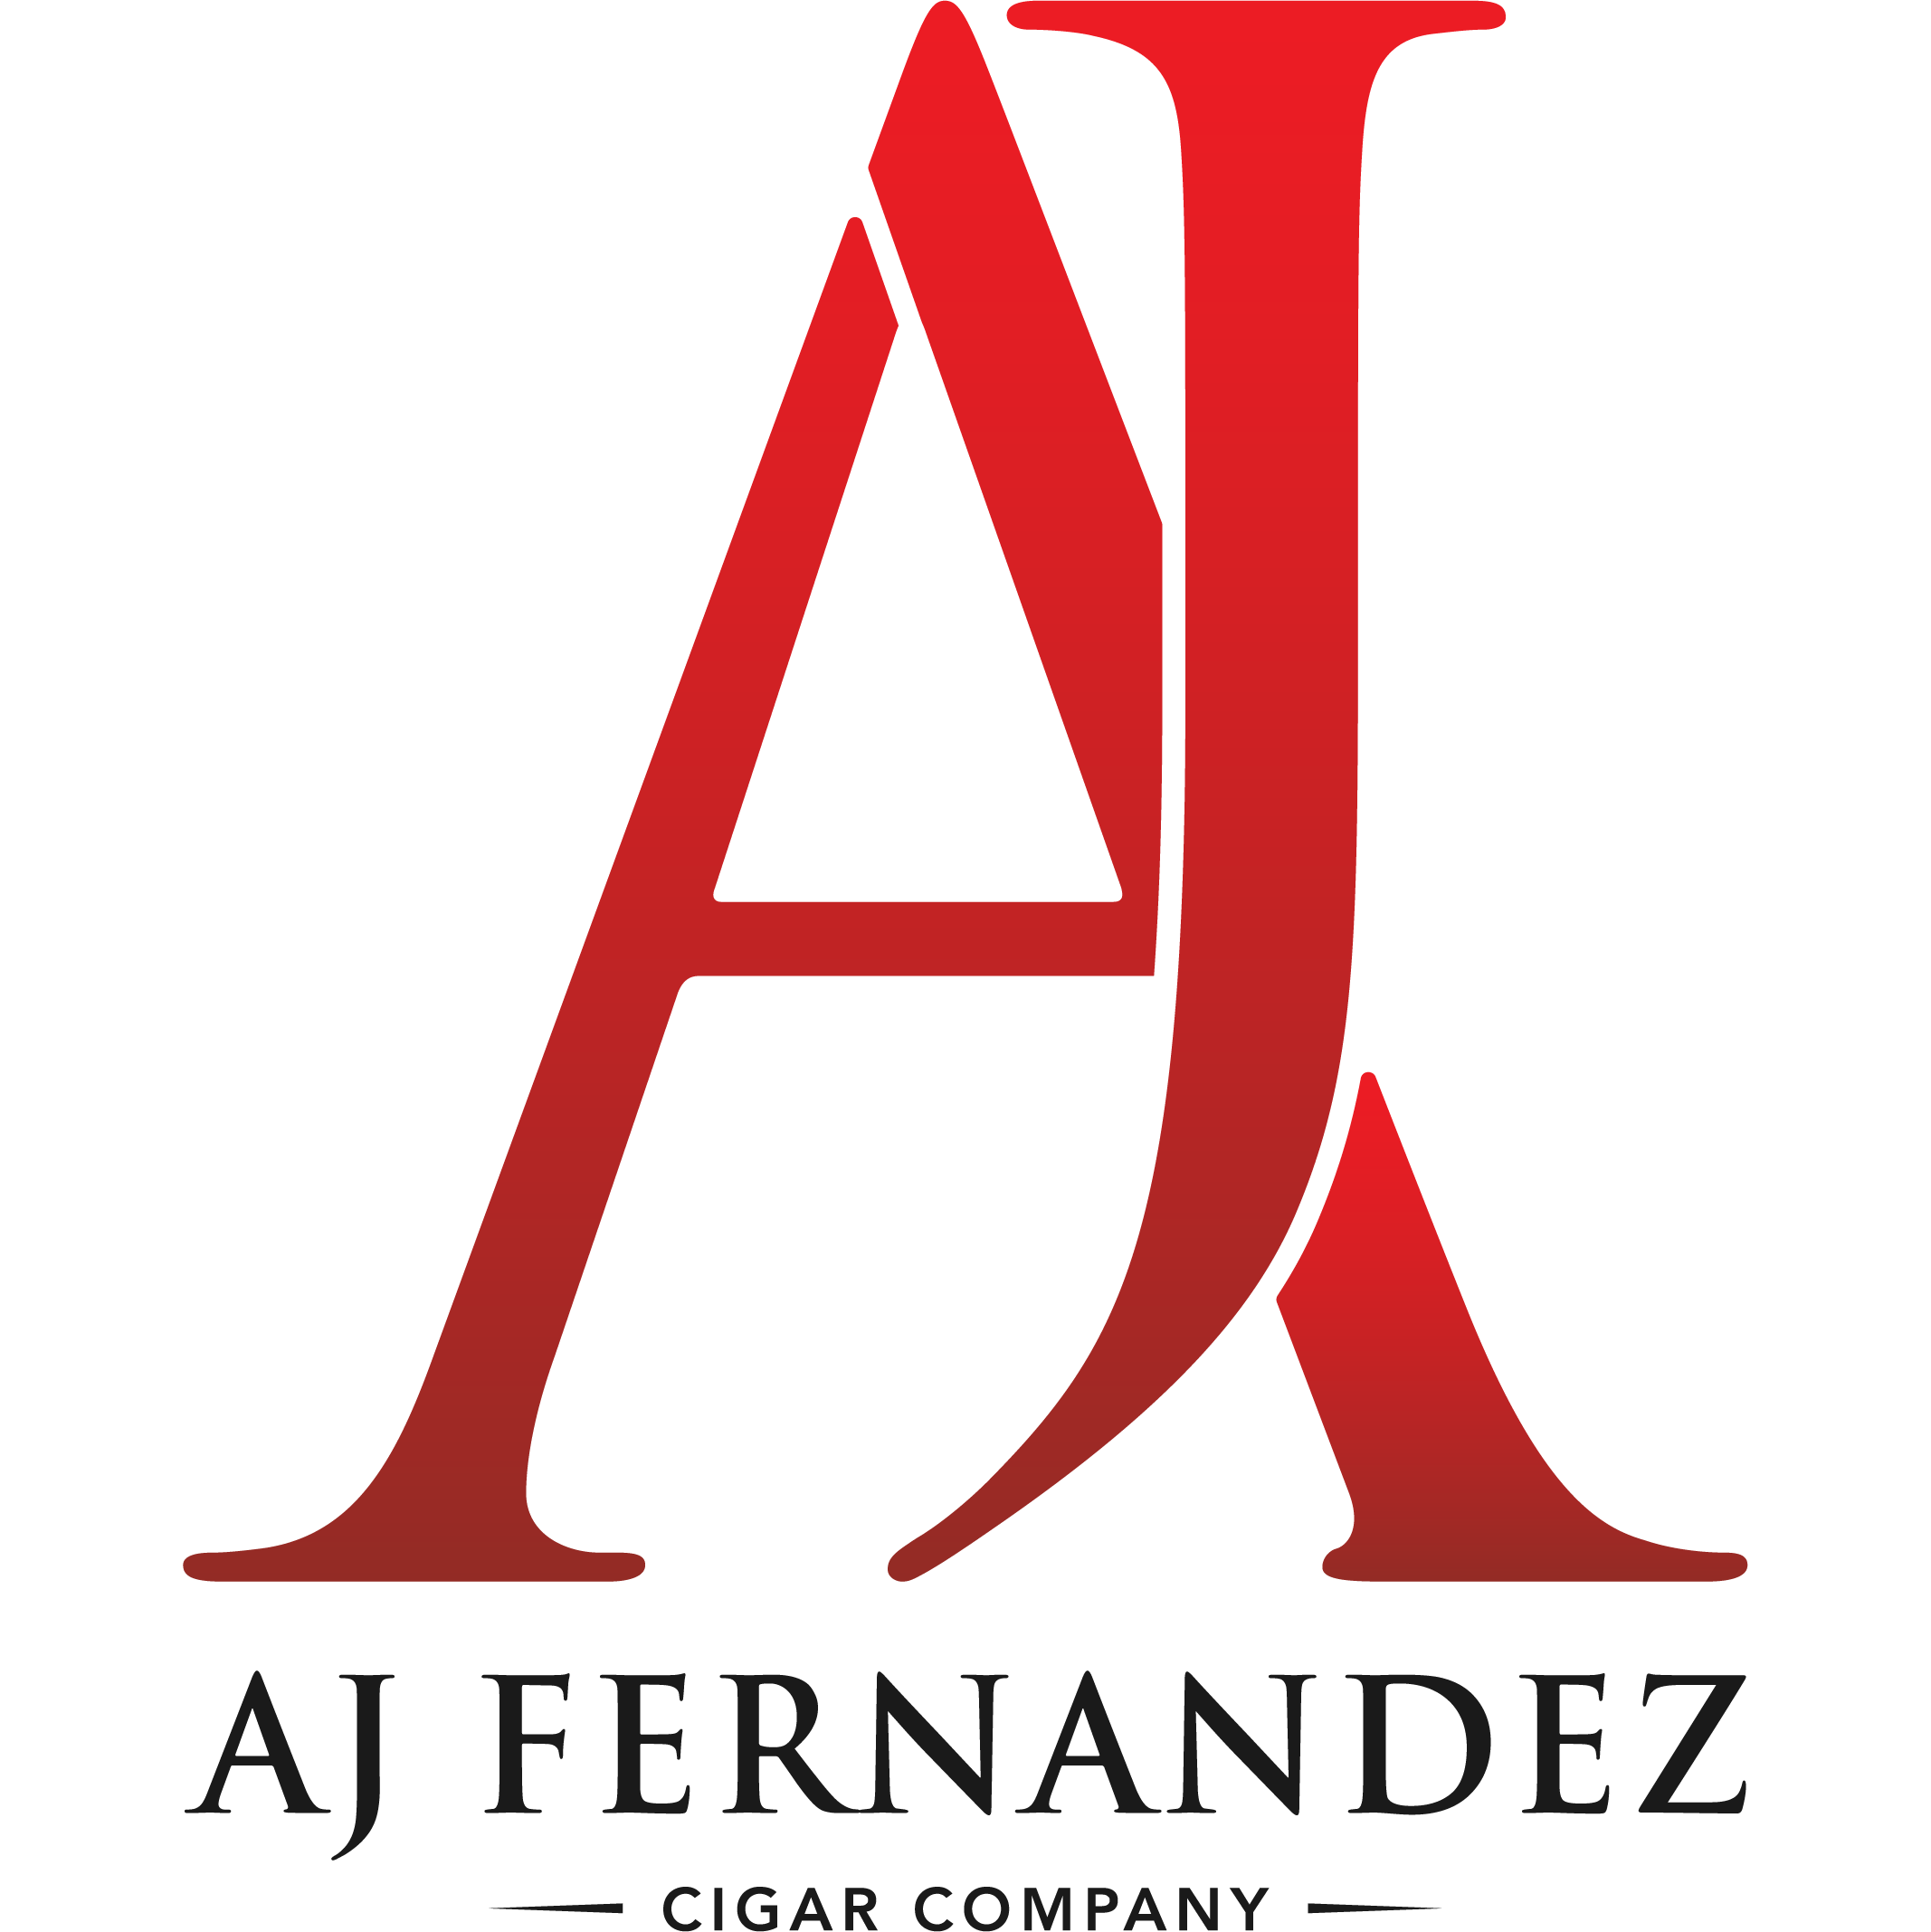 AJ Fernandez Cigars - Generations of Tobacco Mastery